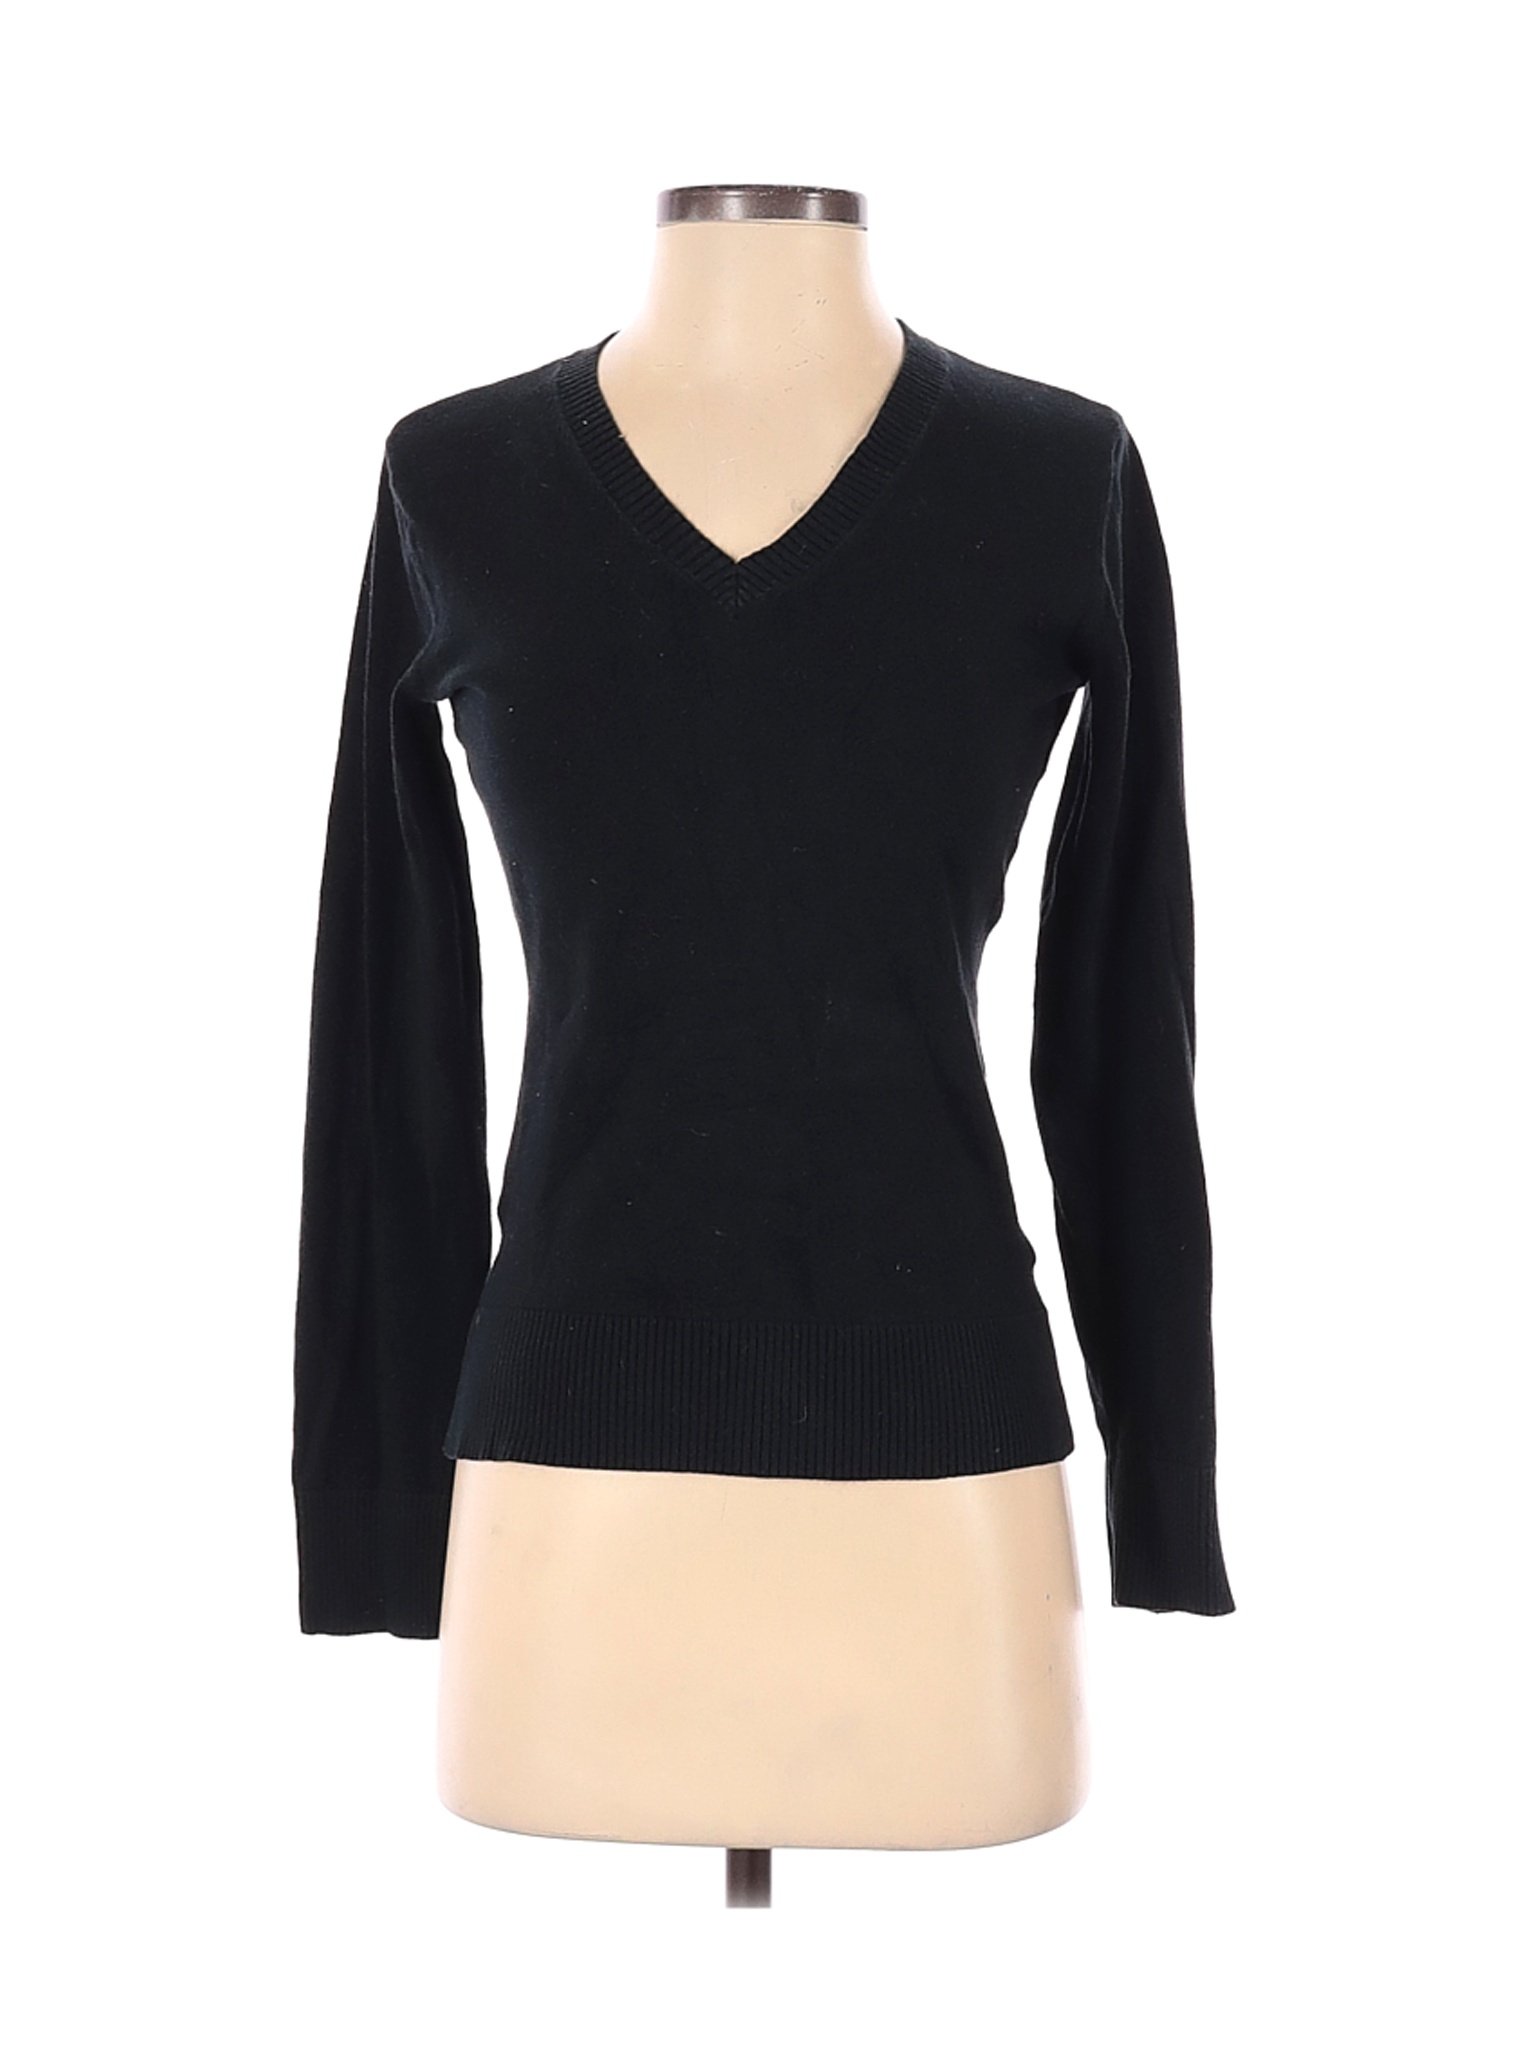 Merona Women Black Pullover Sweater XS | eBay